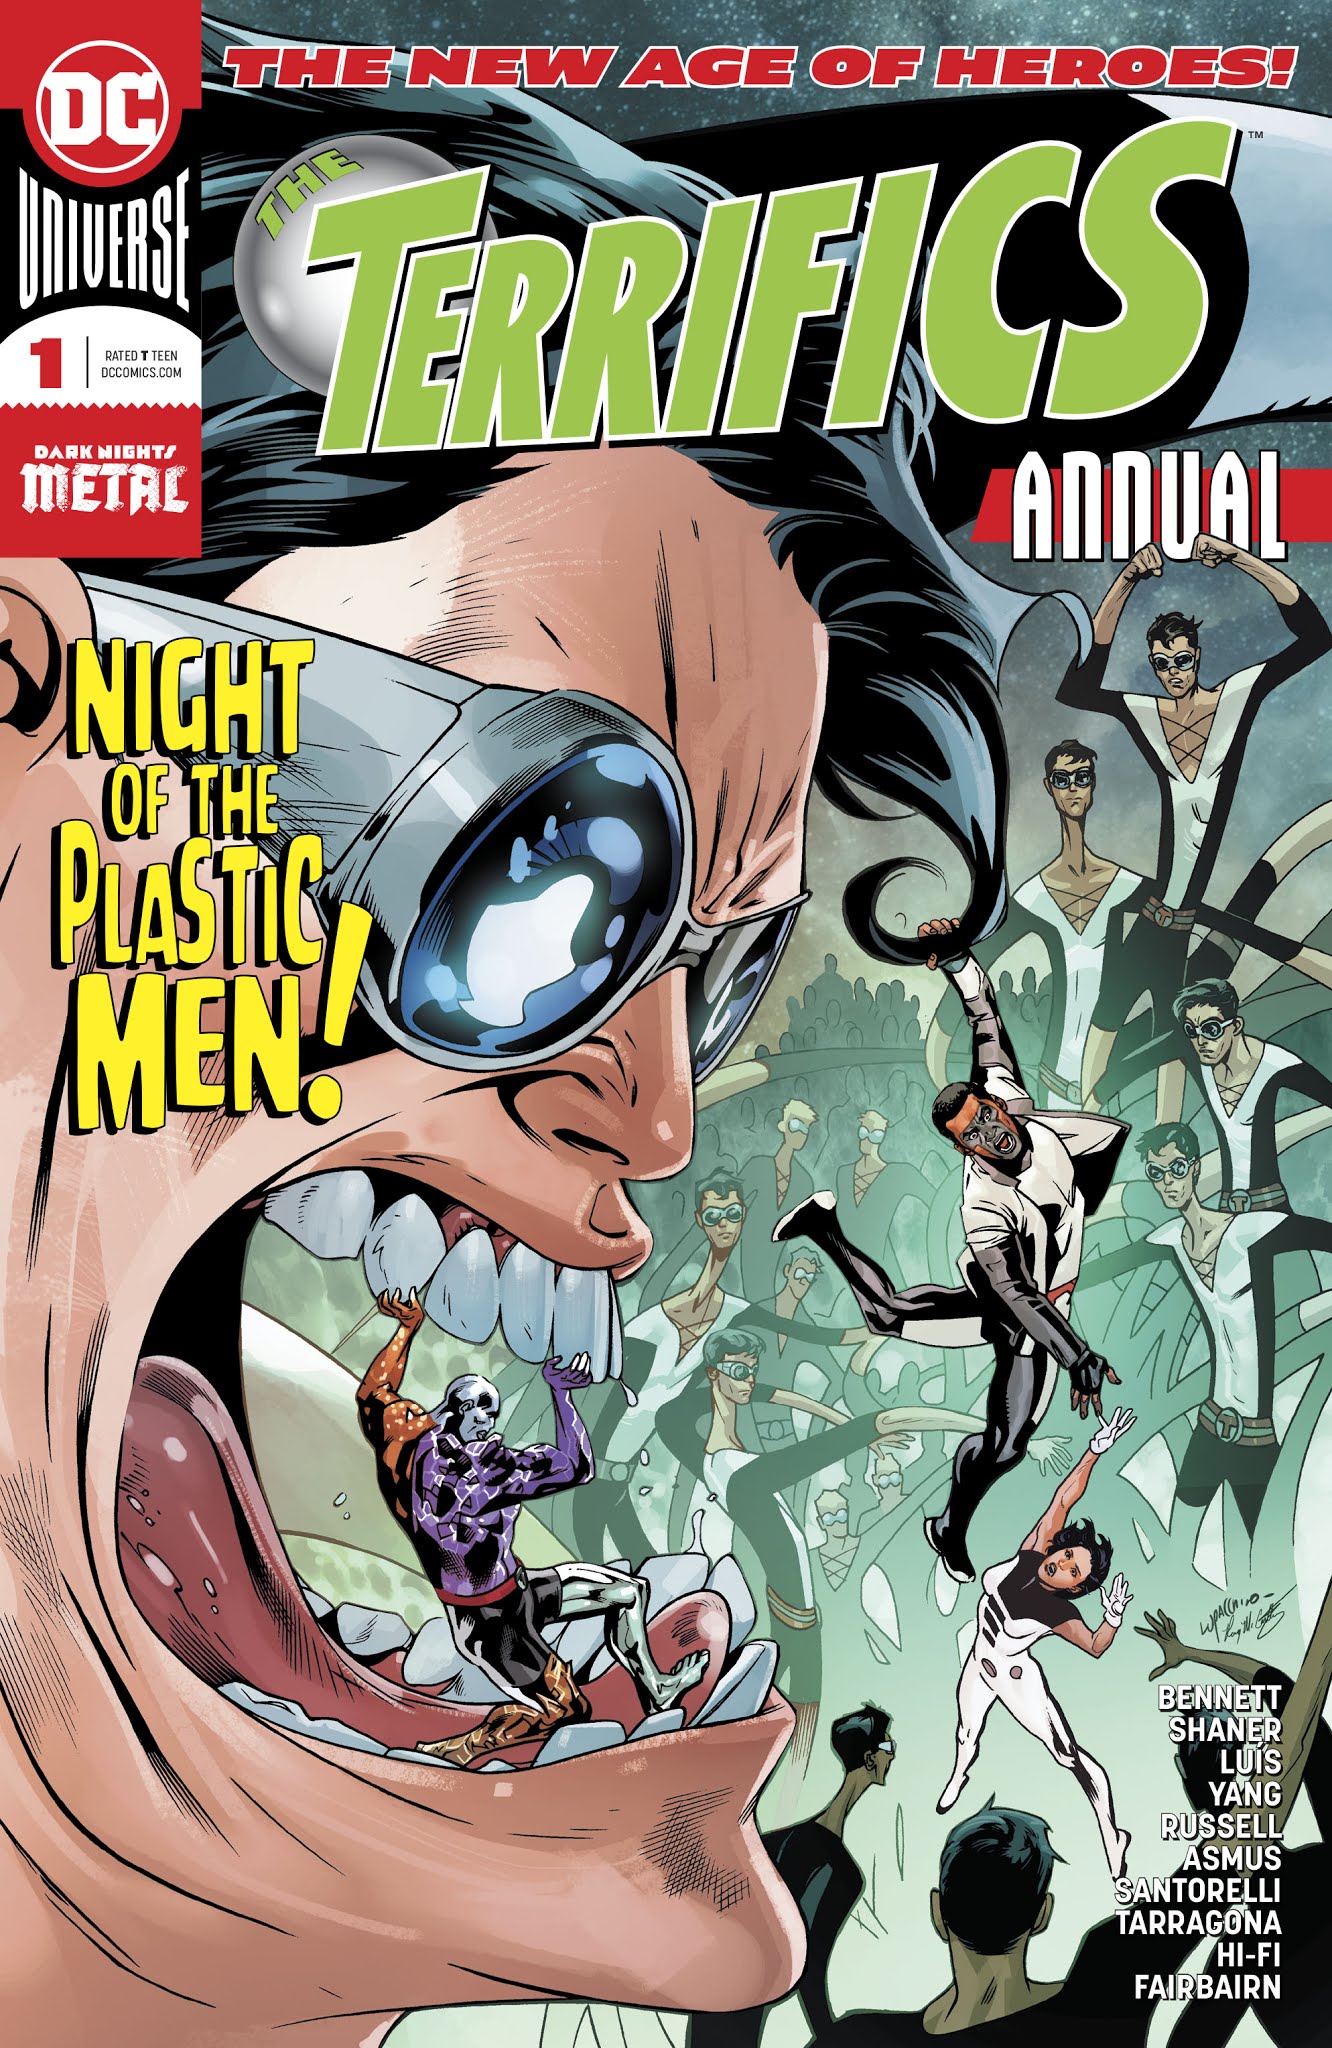 Read online The Terrifics comic -  Issue # Annual 1 - 1